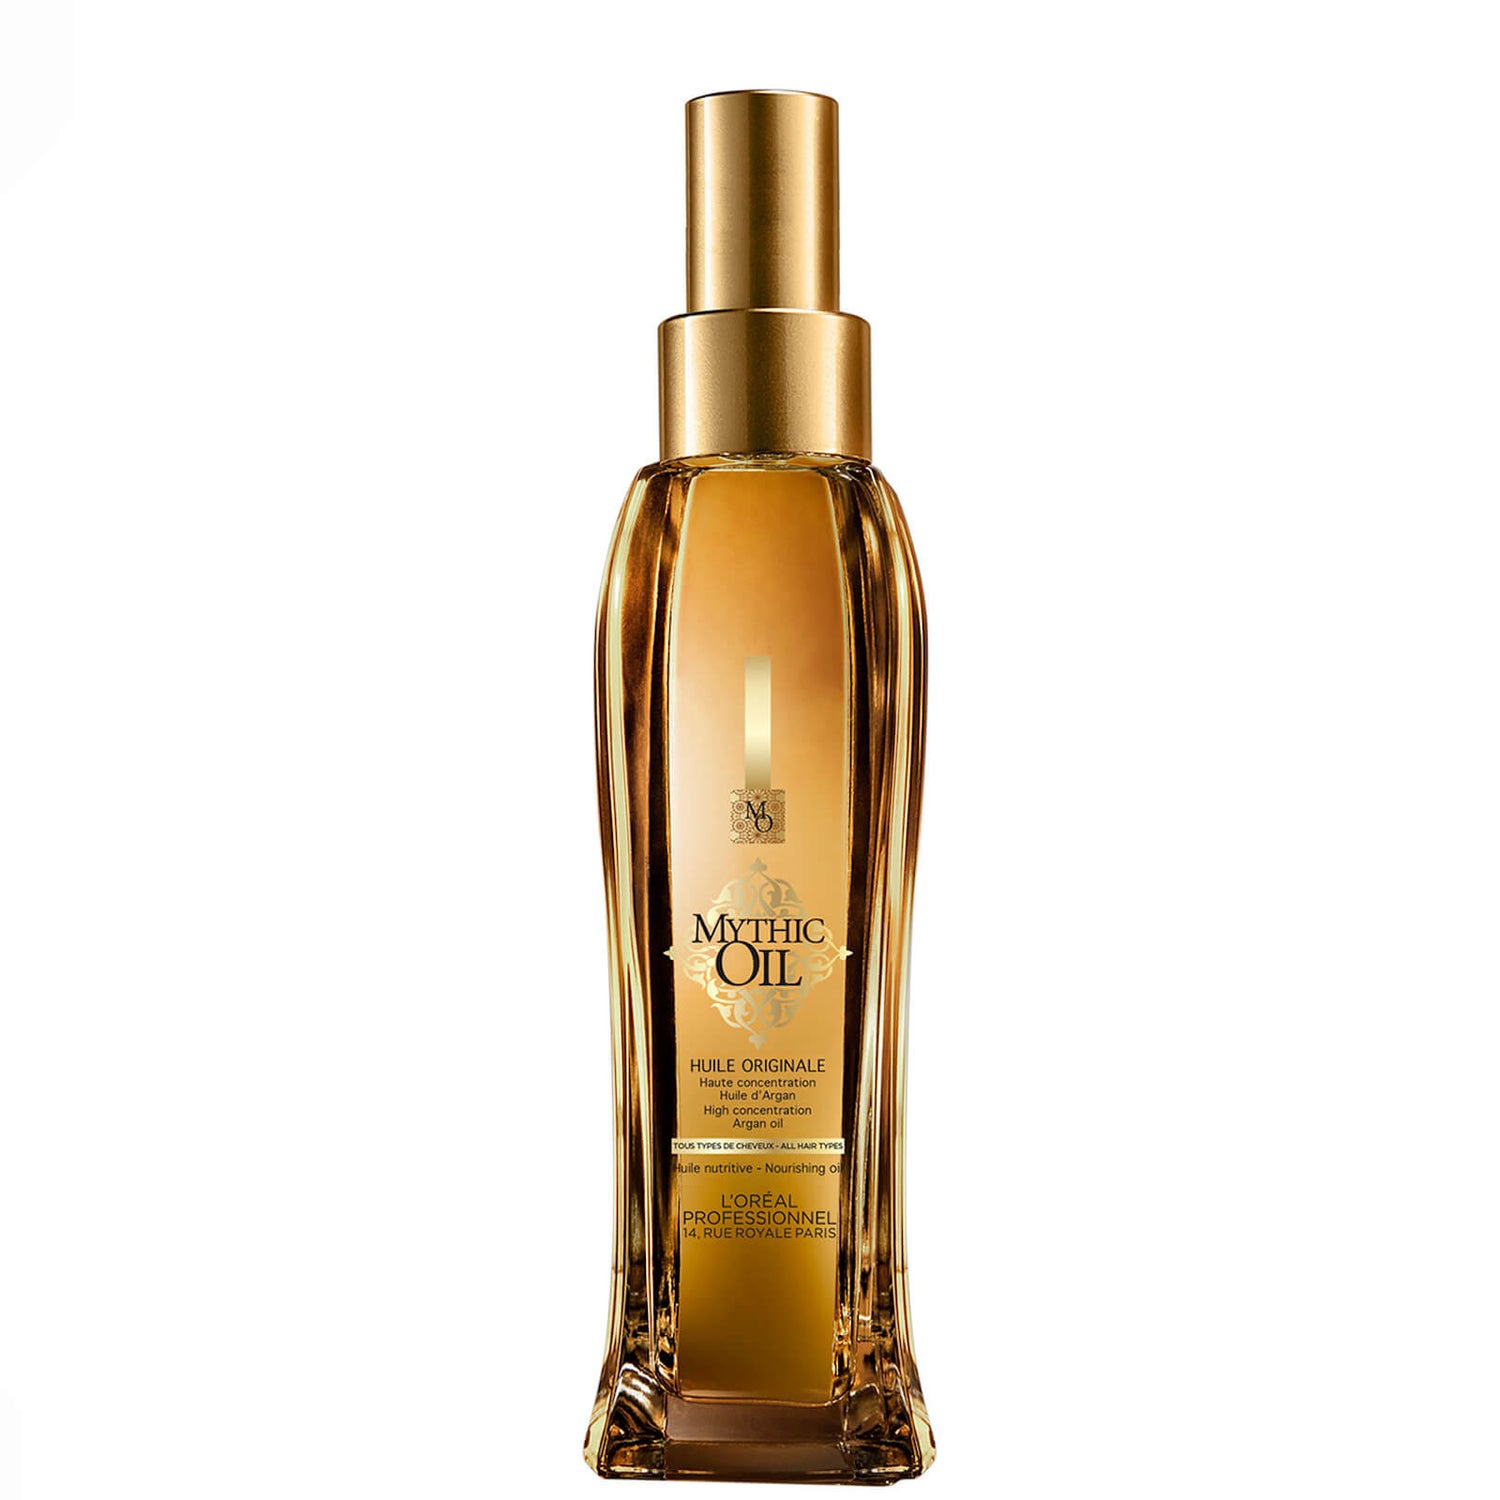 L’Oréal Professional Mythic Oil huile nutritive (100ml)